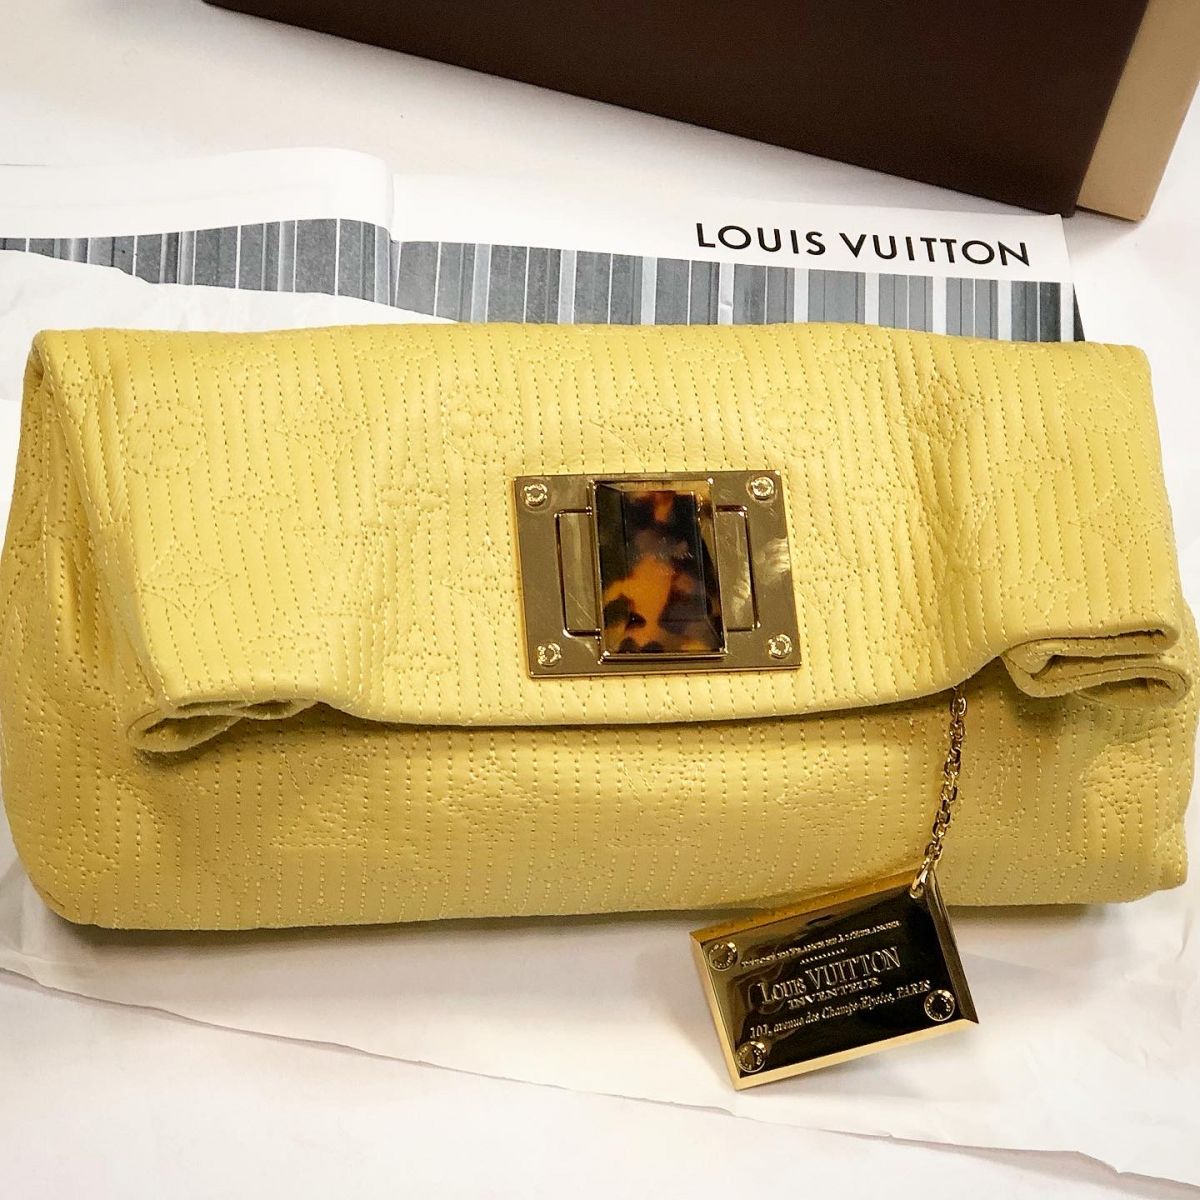 Клатч Louis Vuitton  размер 28/15 цена 24 616 руб